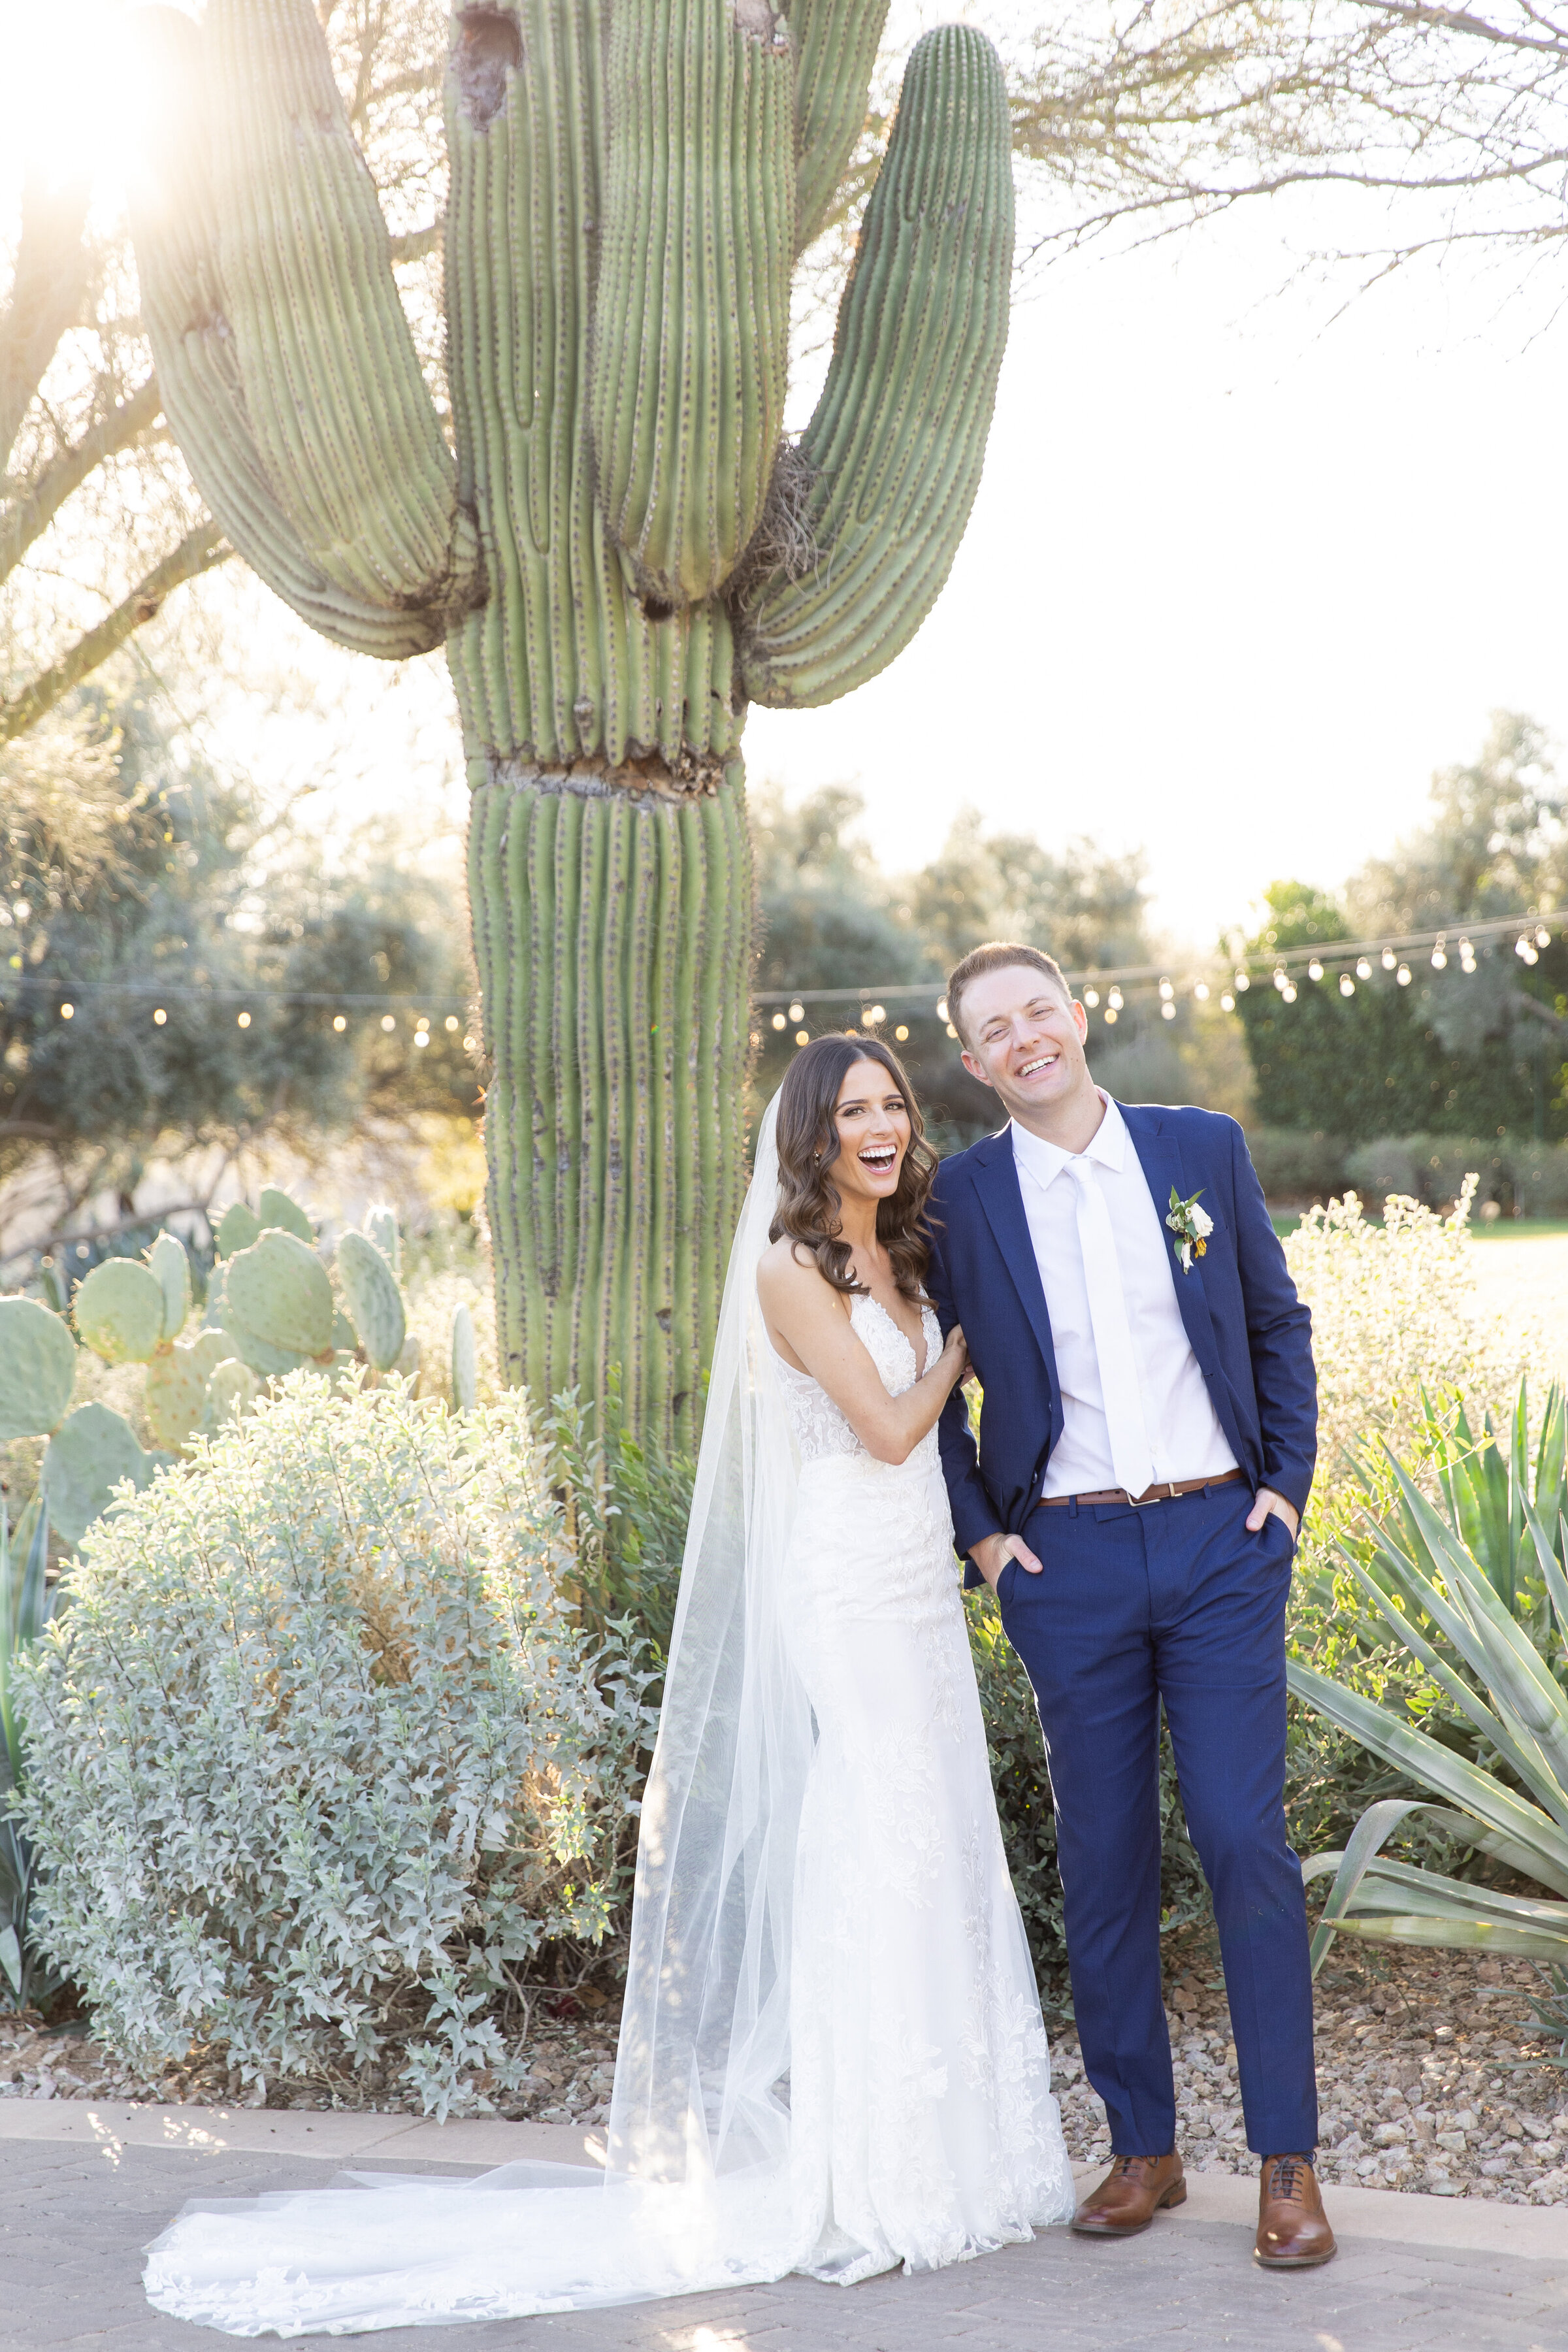 Karlie Colleen Photography - Kelcie & Ross - El Chorro Wedding - Arizona - Some like it classic -869